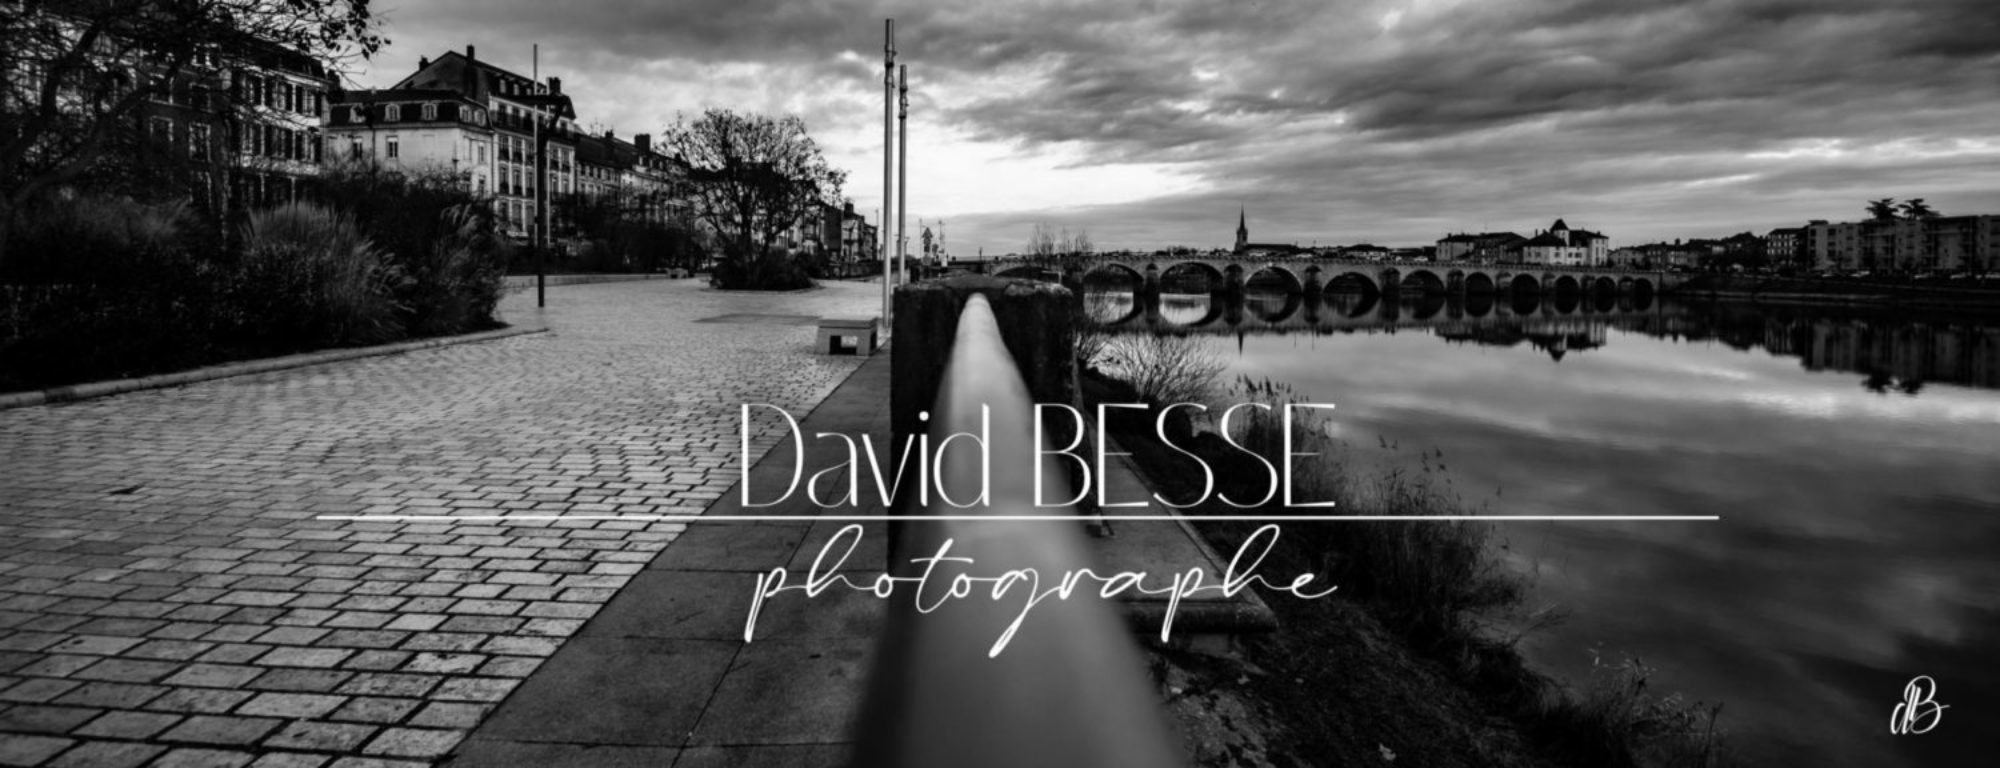 David BESSE, Photographe